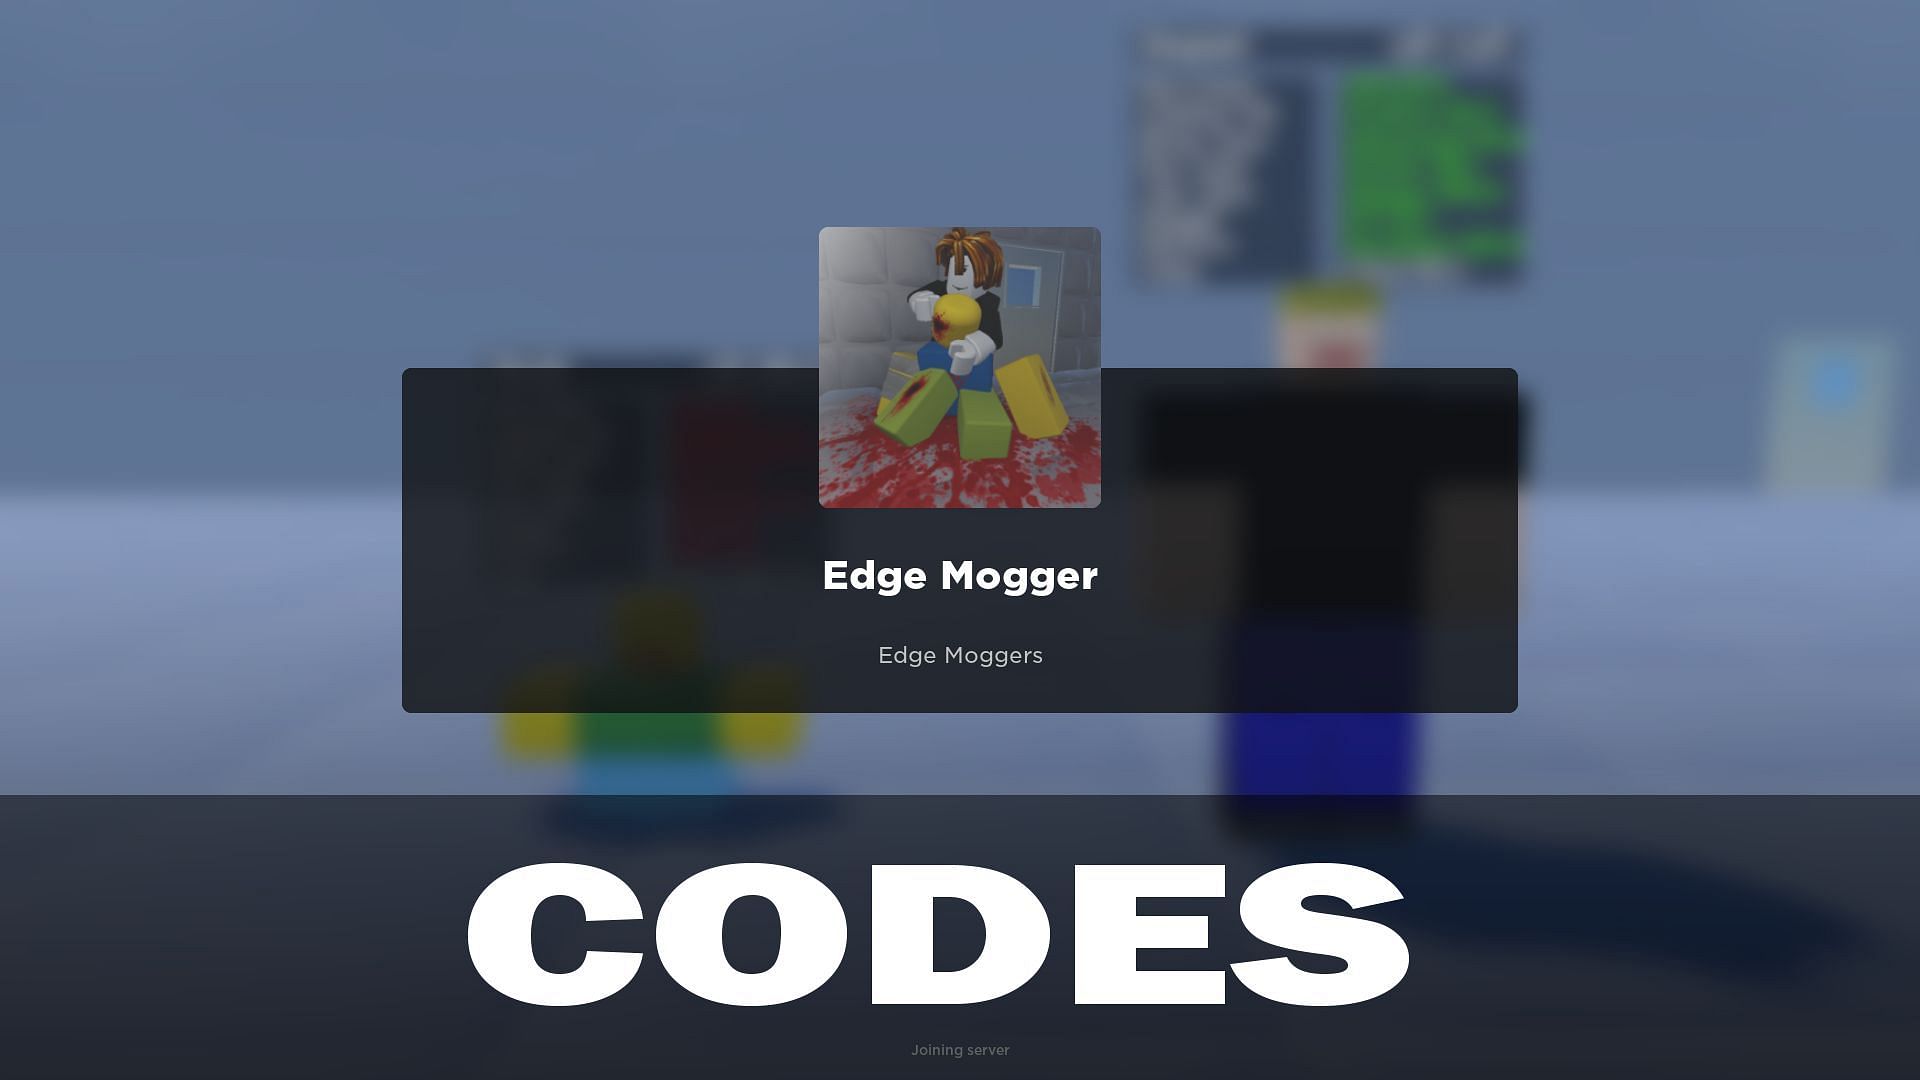 Edge Mogger codes